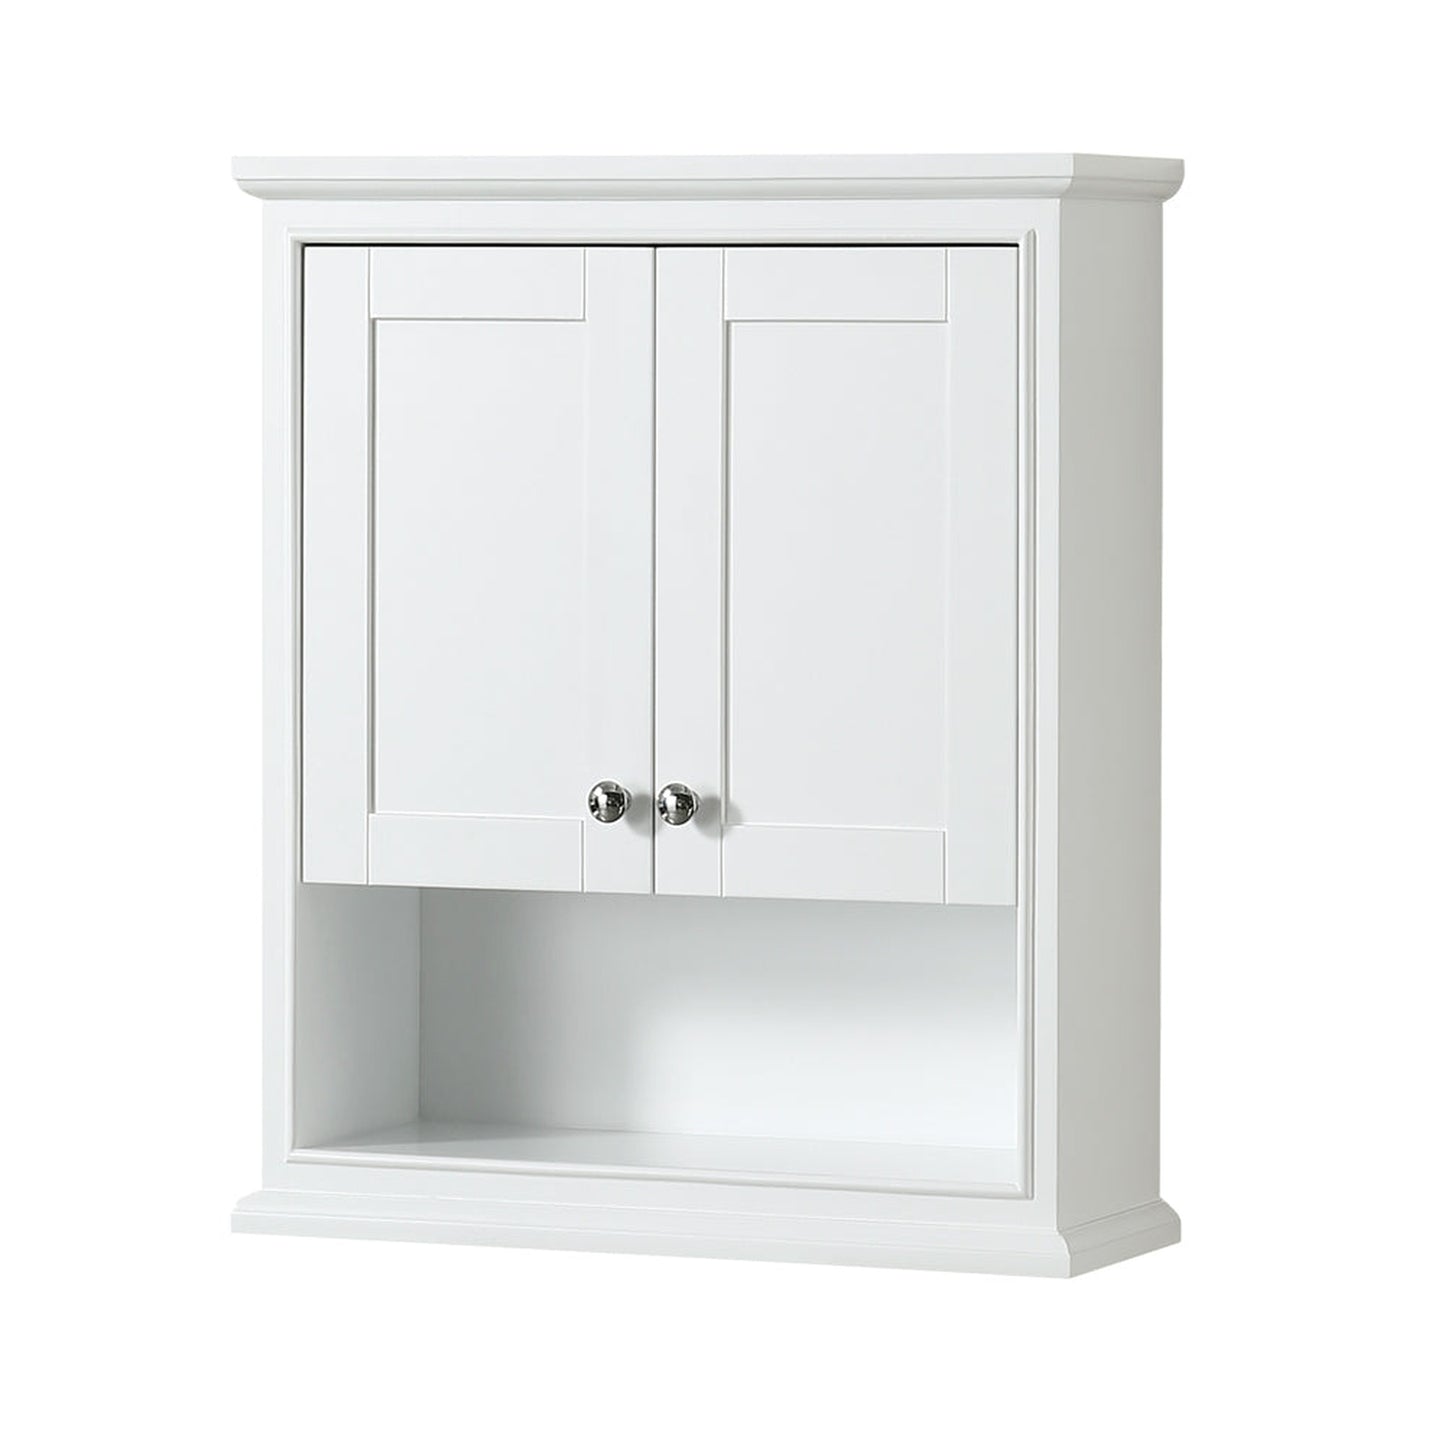 Wyndham Collection Deborah Bathroom Wall-Mounted Storage Cabinet in White